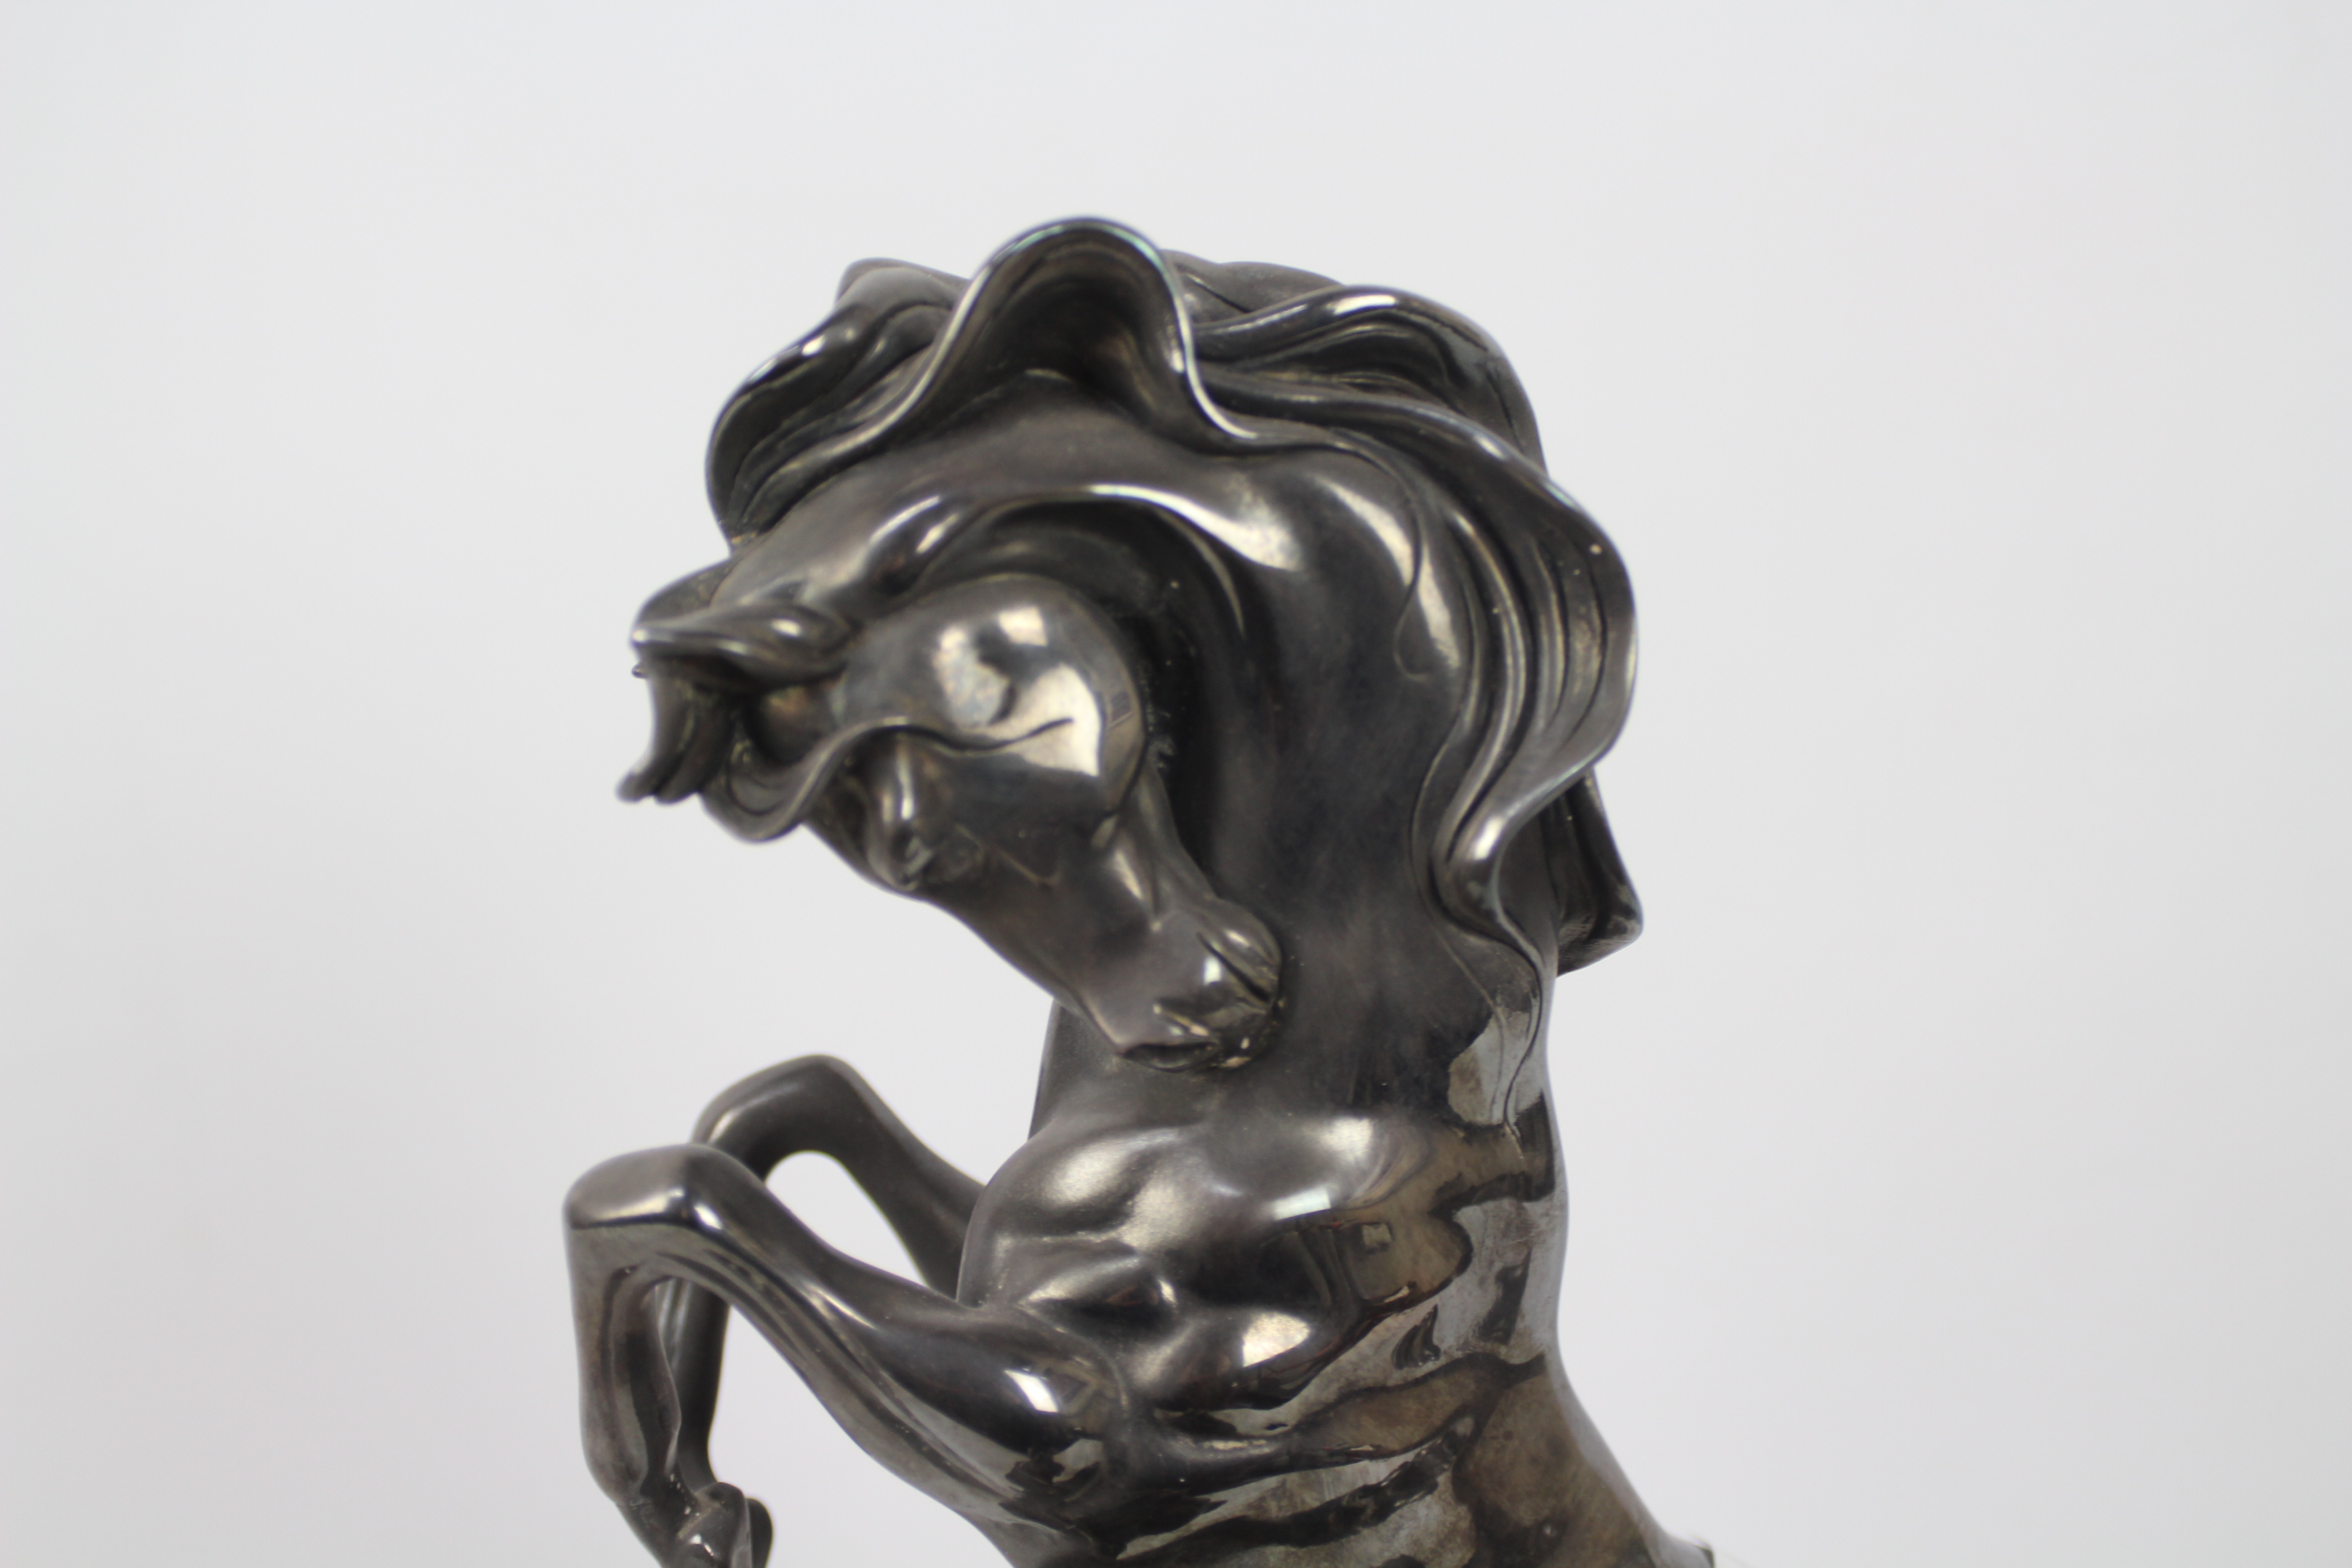 Ottaviani (Italian), 20th century - A silvered sculpture of three horses surmounting a rock, - Image 6 of 7